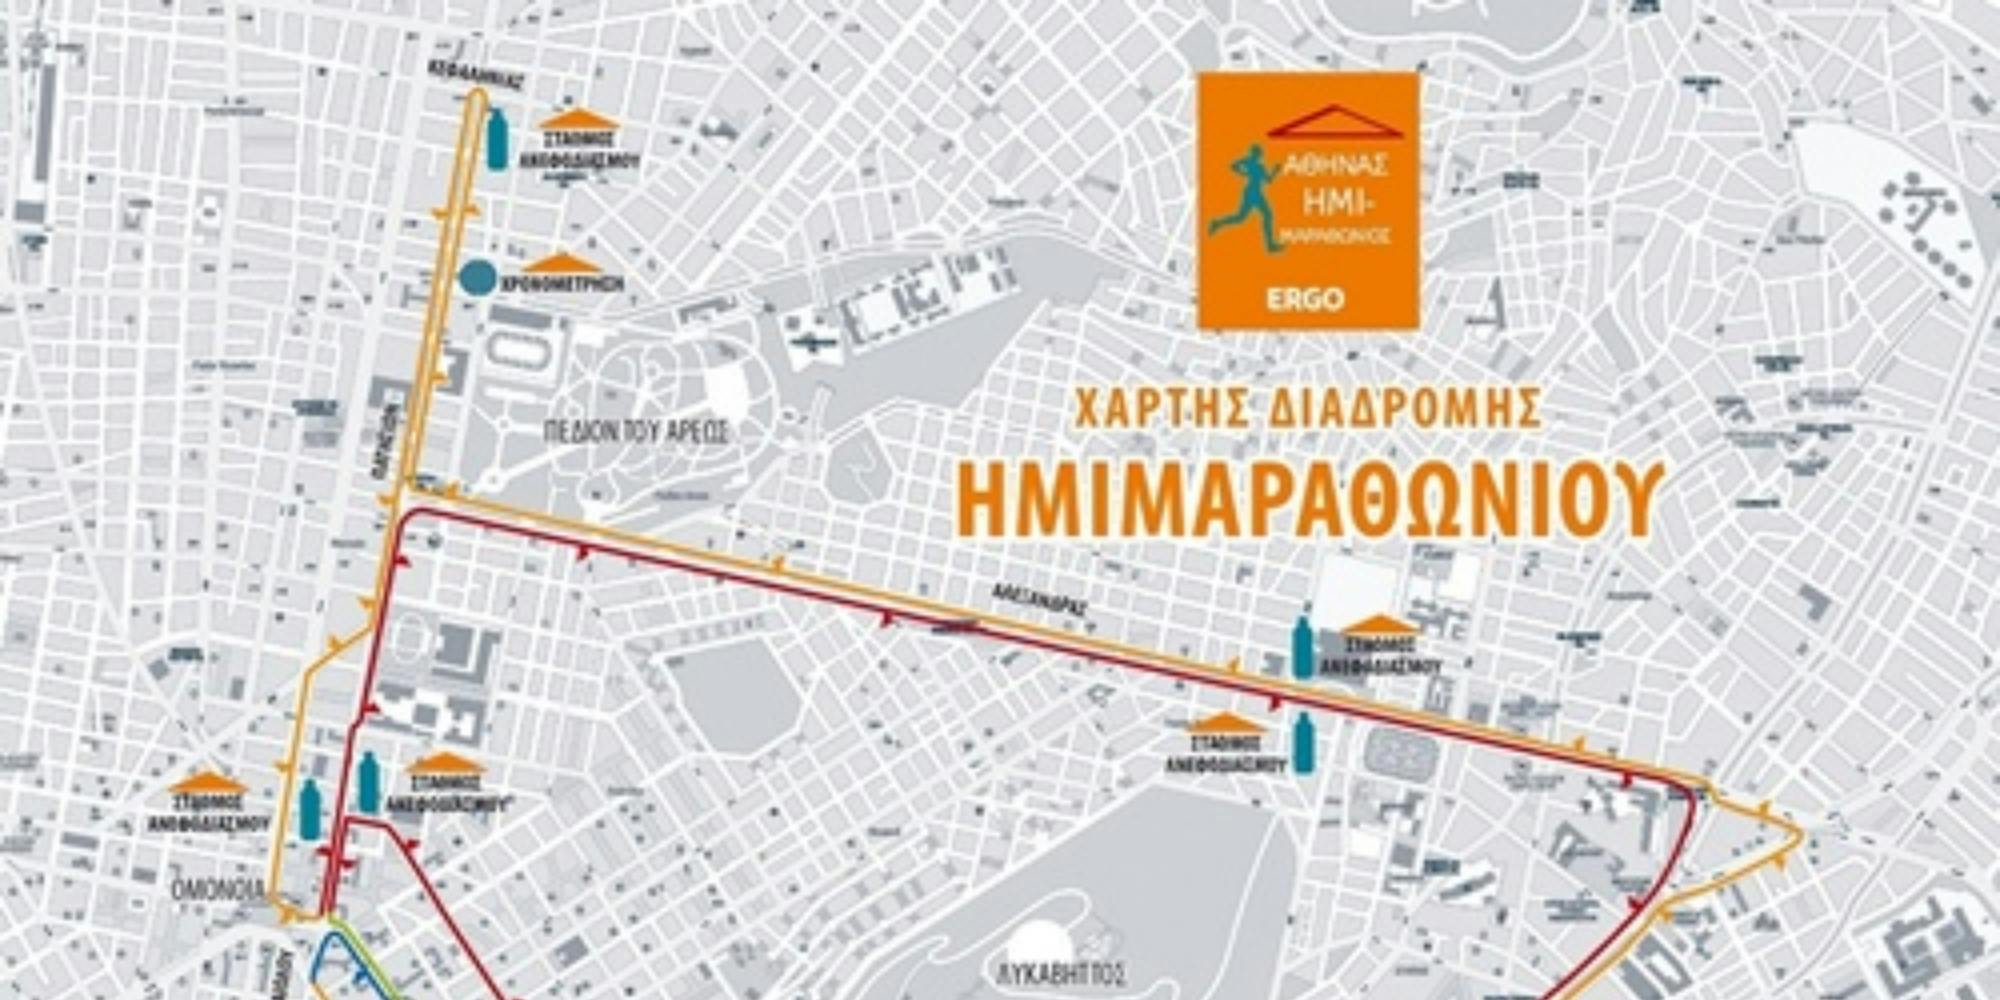 Aνάλυση: Πως οι αλλαγές στη διαδρομή του Ημιμαραθωνίου της Αθήνας ανατρέπουν τη τακτική του αγώνα